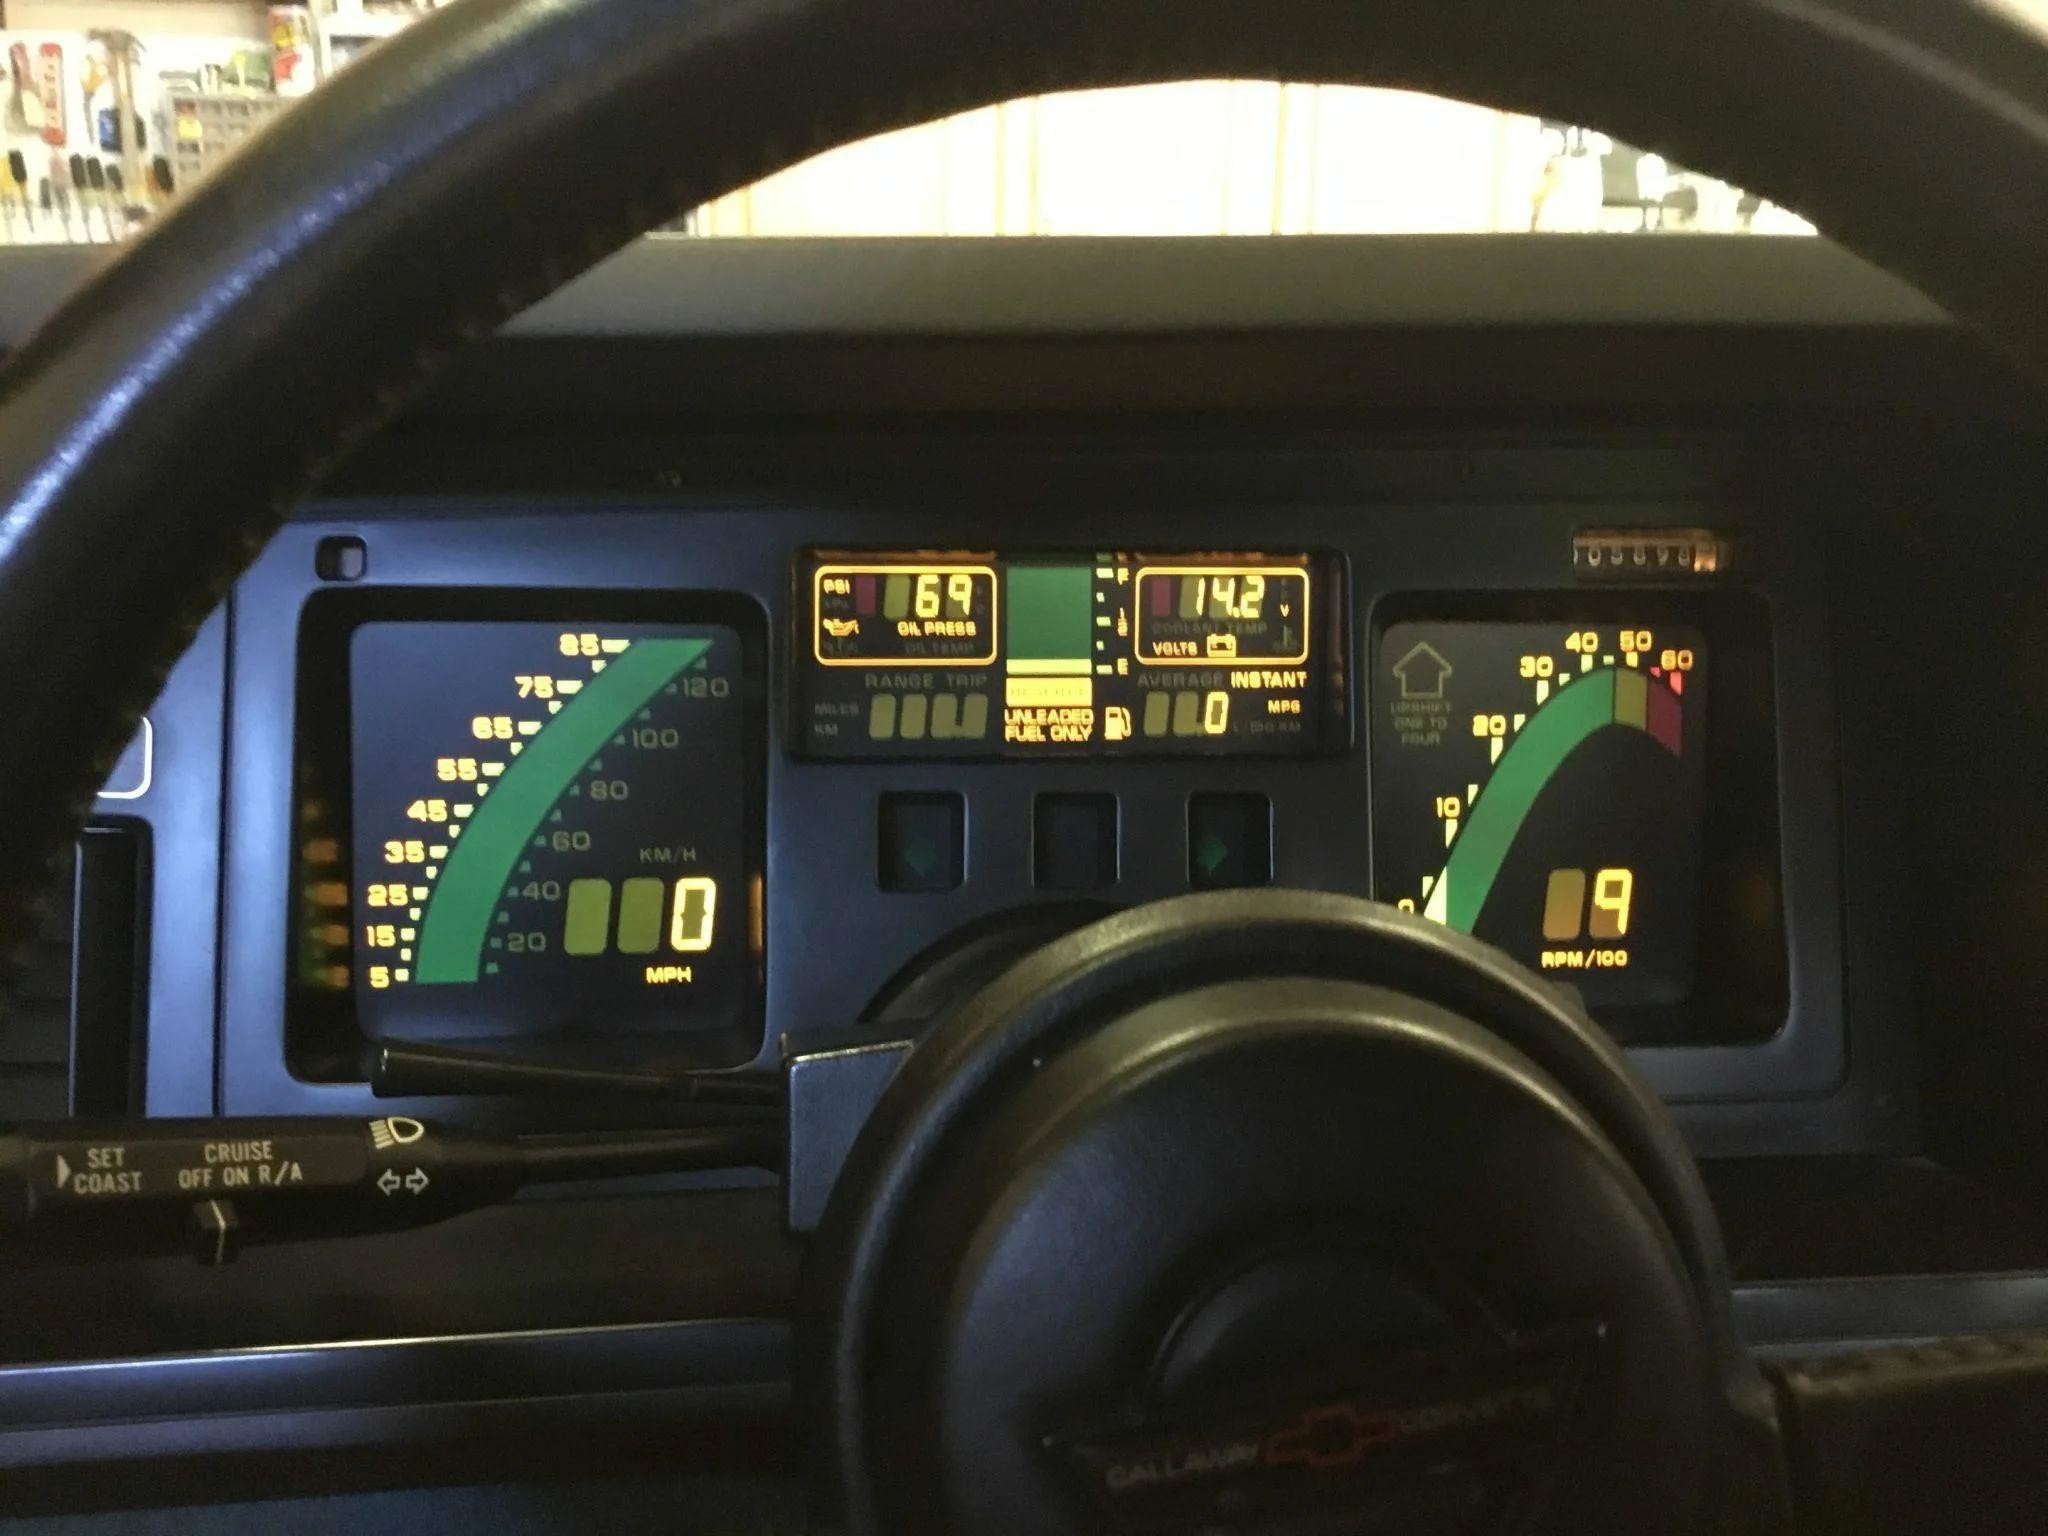 Прокачанный Chevrolet Corvette Callaway Twin Turbo конца 80-х